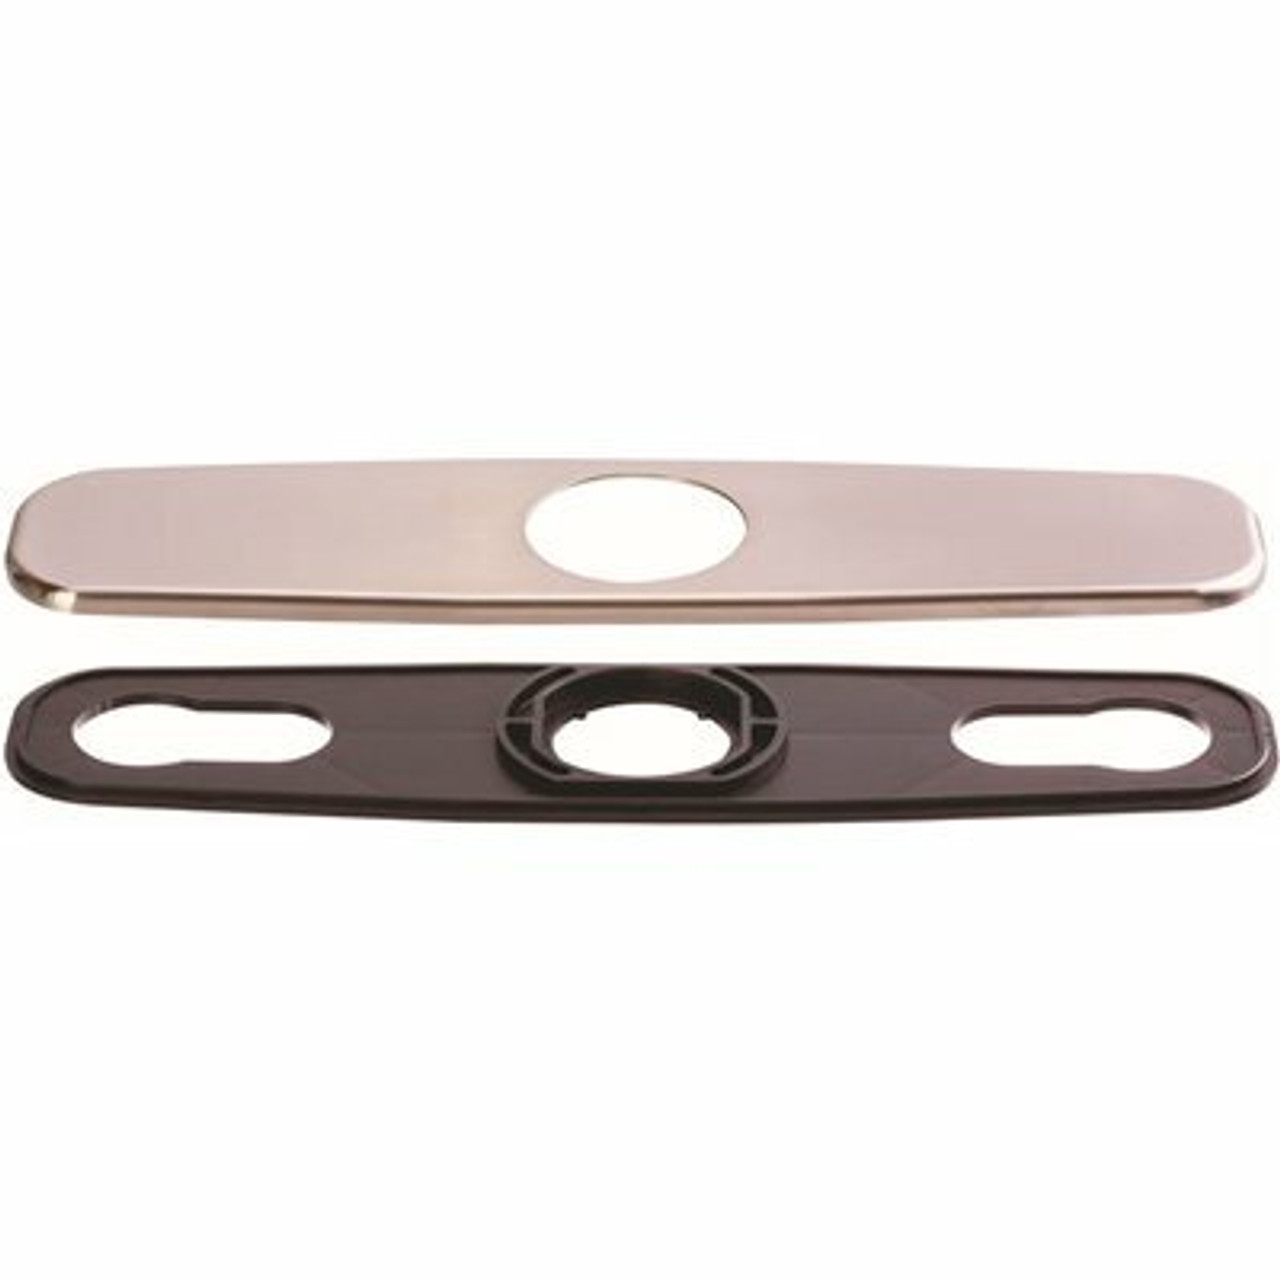 Premier 3-Hole Deck Plate In Brushed Nickel